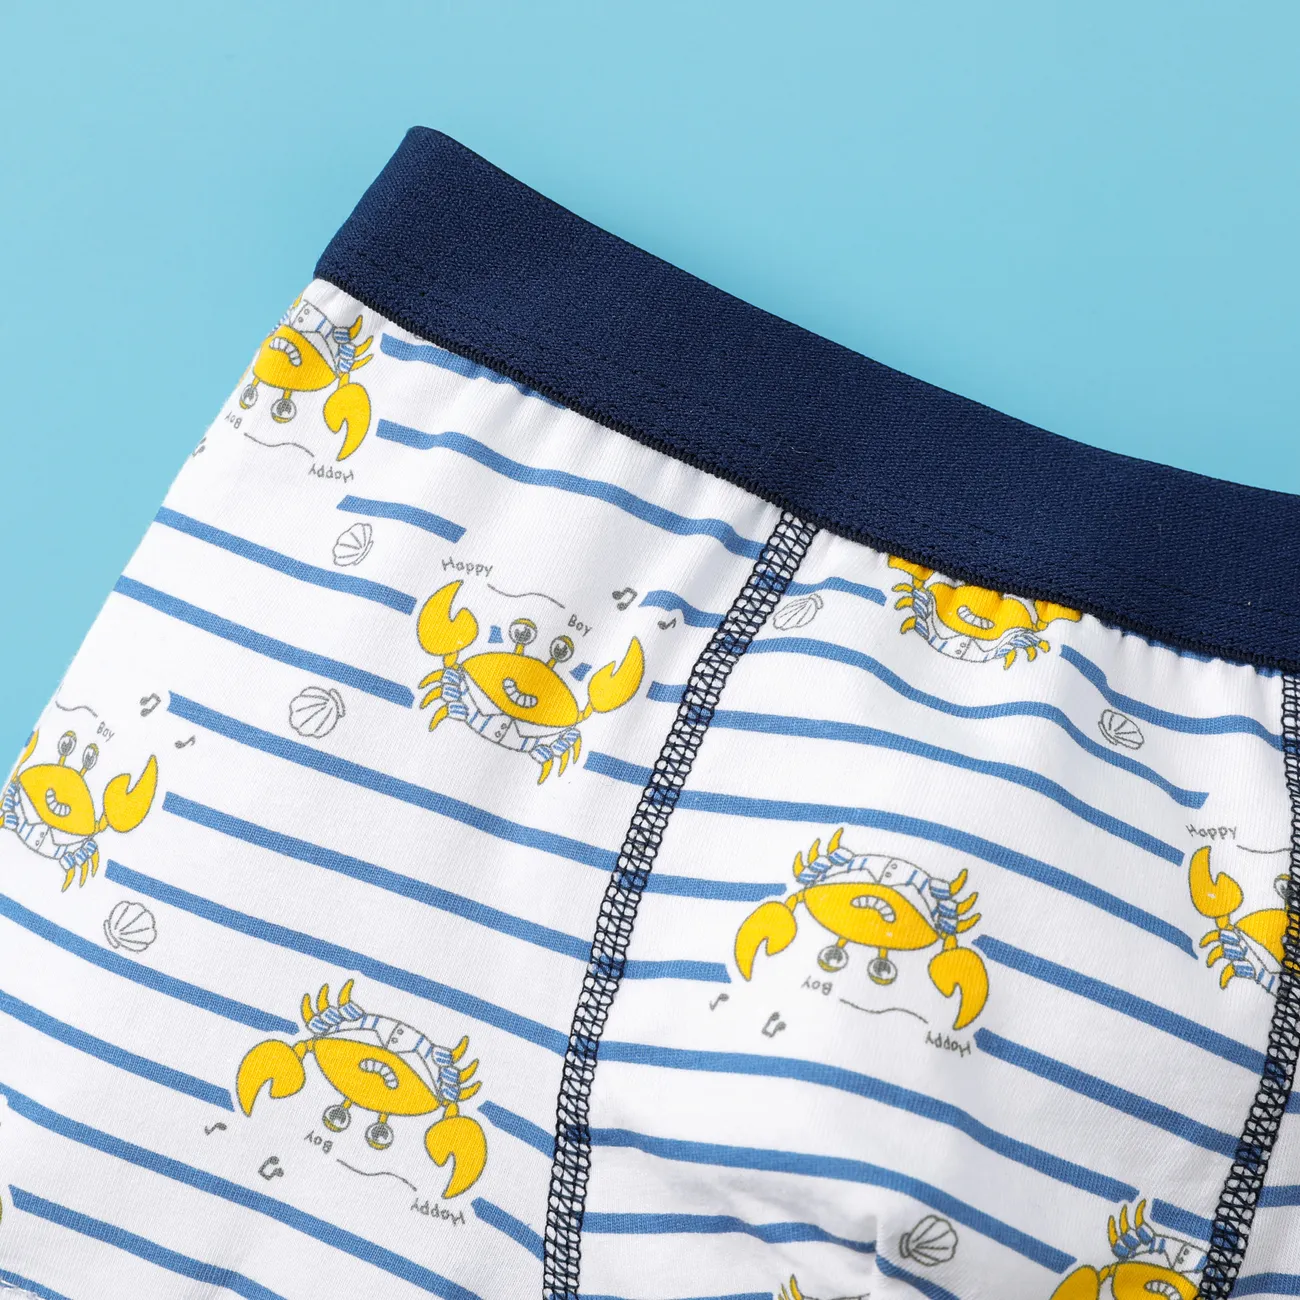 4 Pieces Boys' Cotton Underwear Set with Marine Element, Childlike Style Blue big image 1